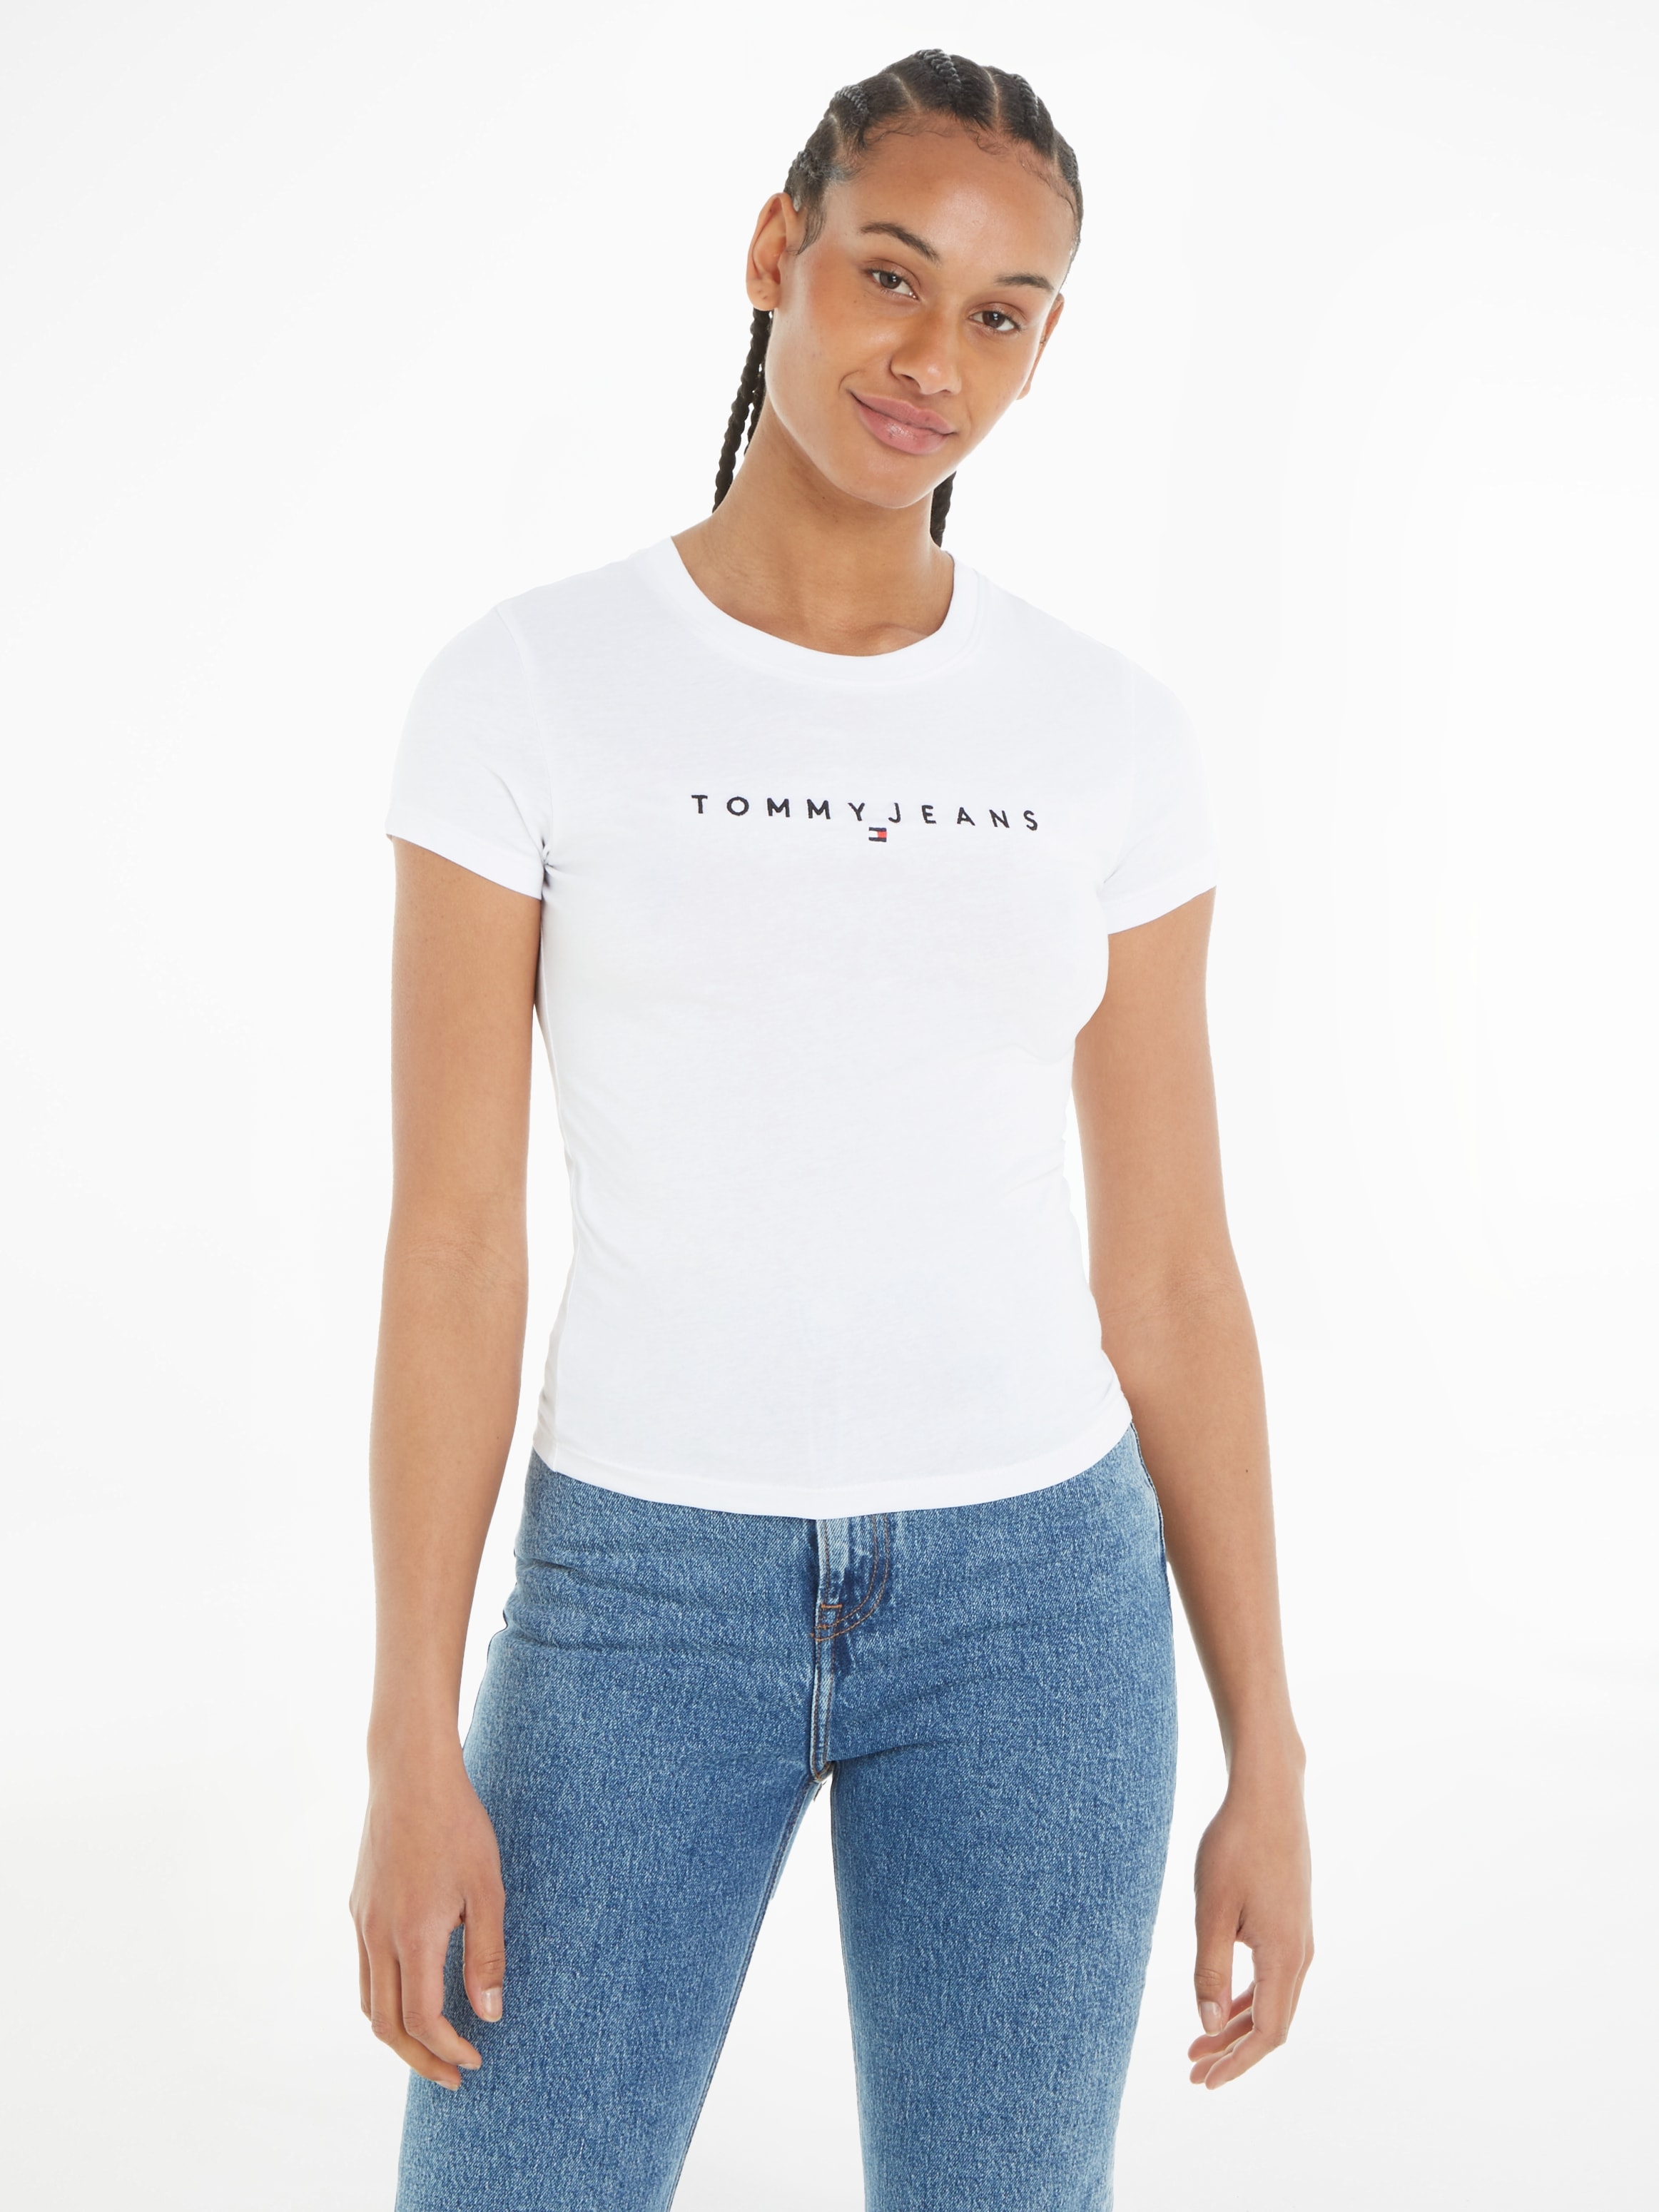 Tommy Jeans T-Shirt Shirt«, bei Linear Logo mit Tee »Slim Logostickerei online